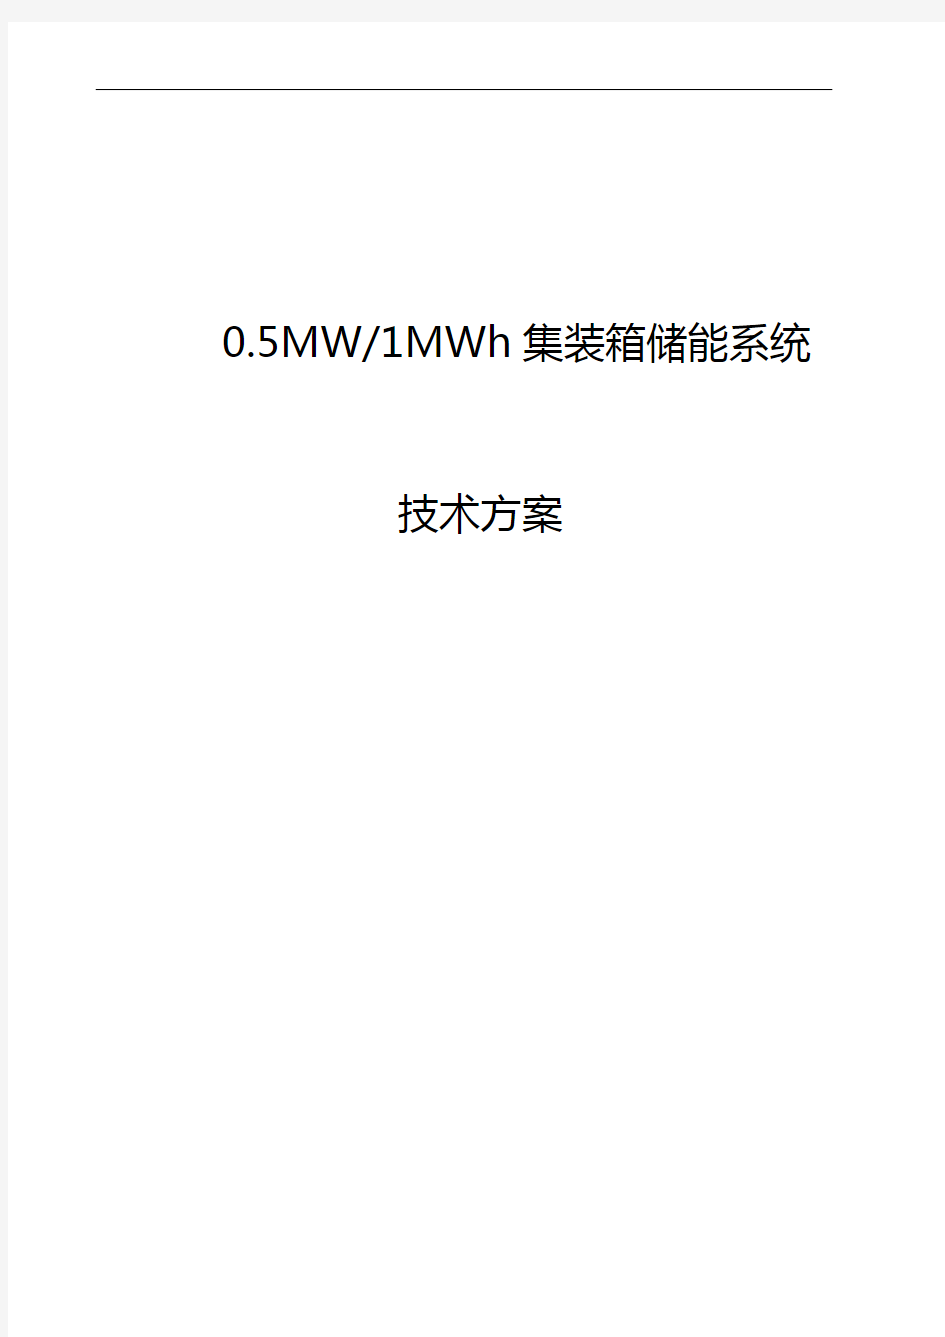 0.5MW-1MWh集装箱储能系统方案